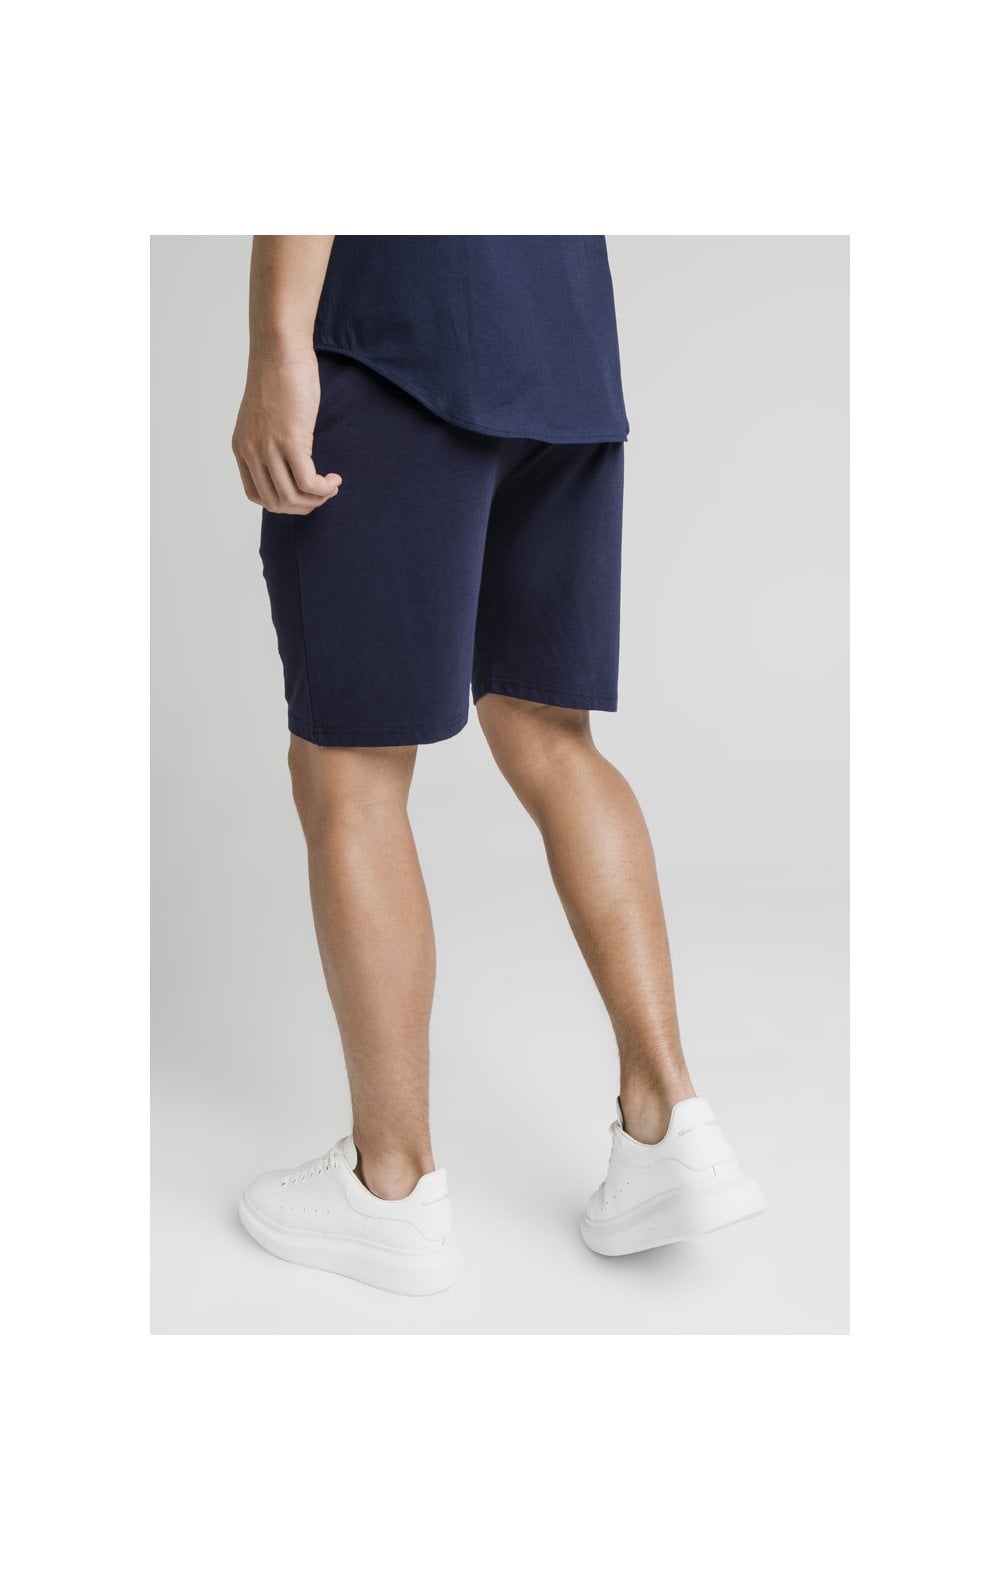 Illusive London Side Tape Jersey Shorts - Navy (3)